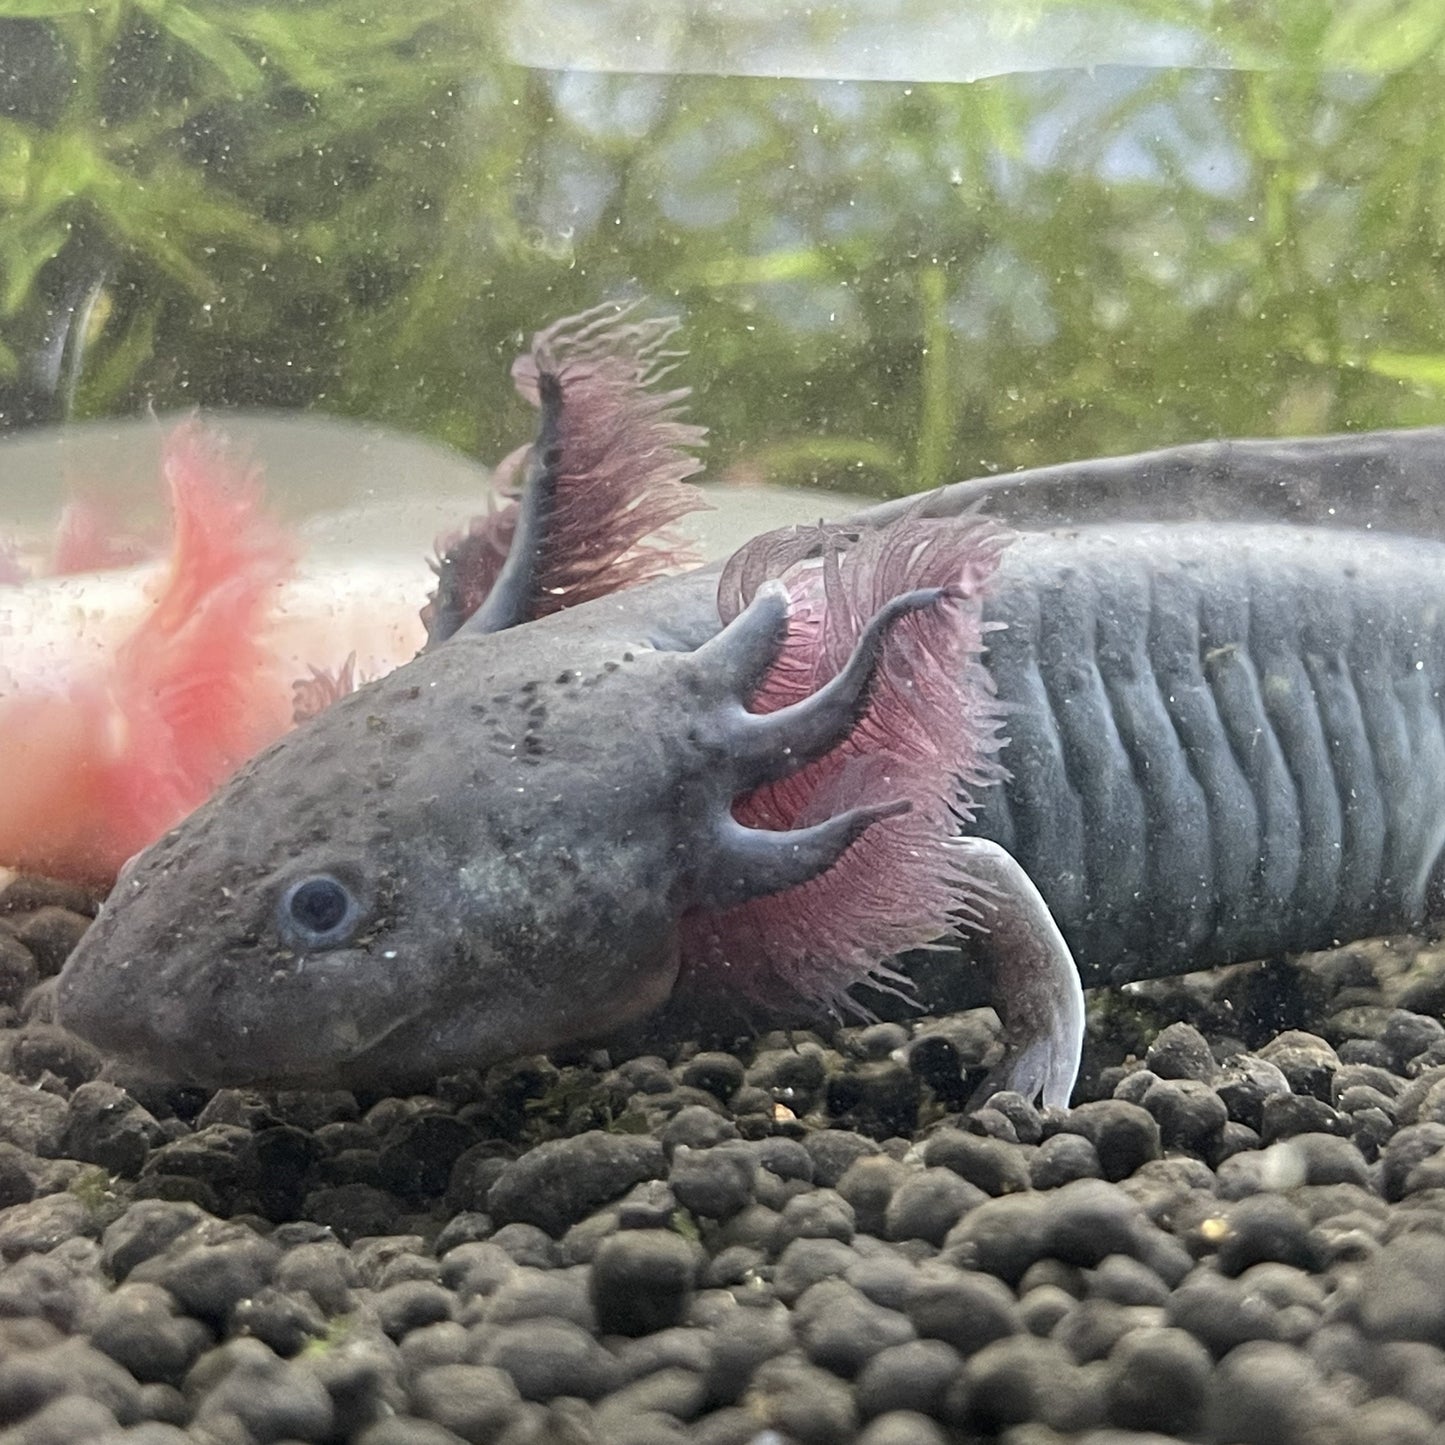 Black Melanoid Axolotl